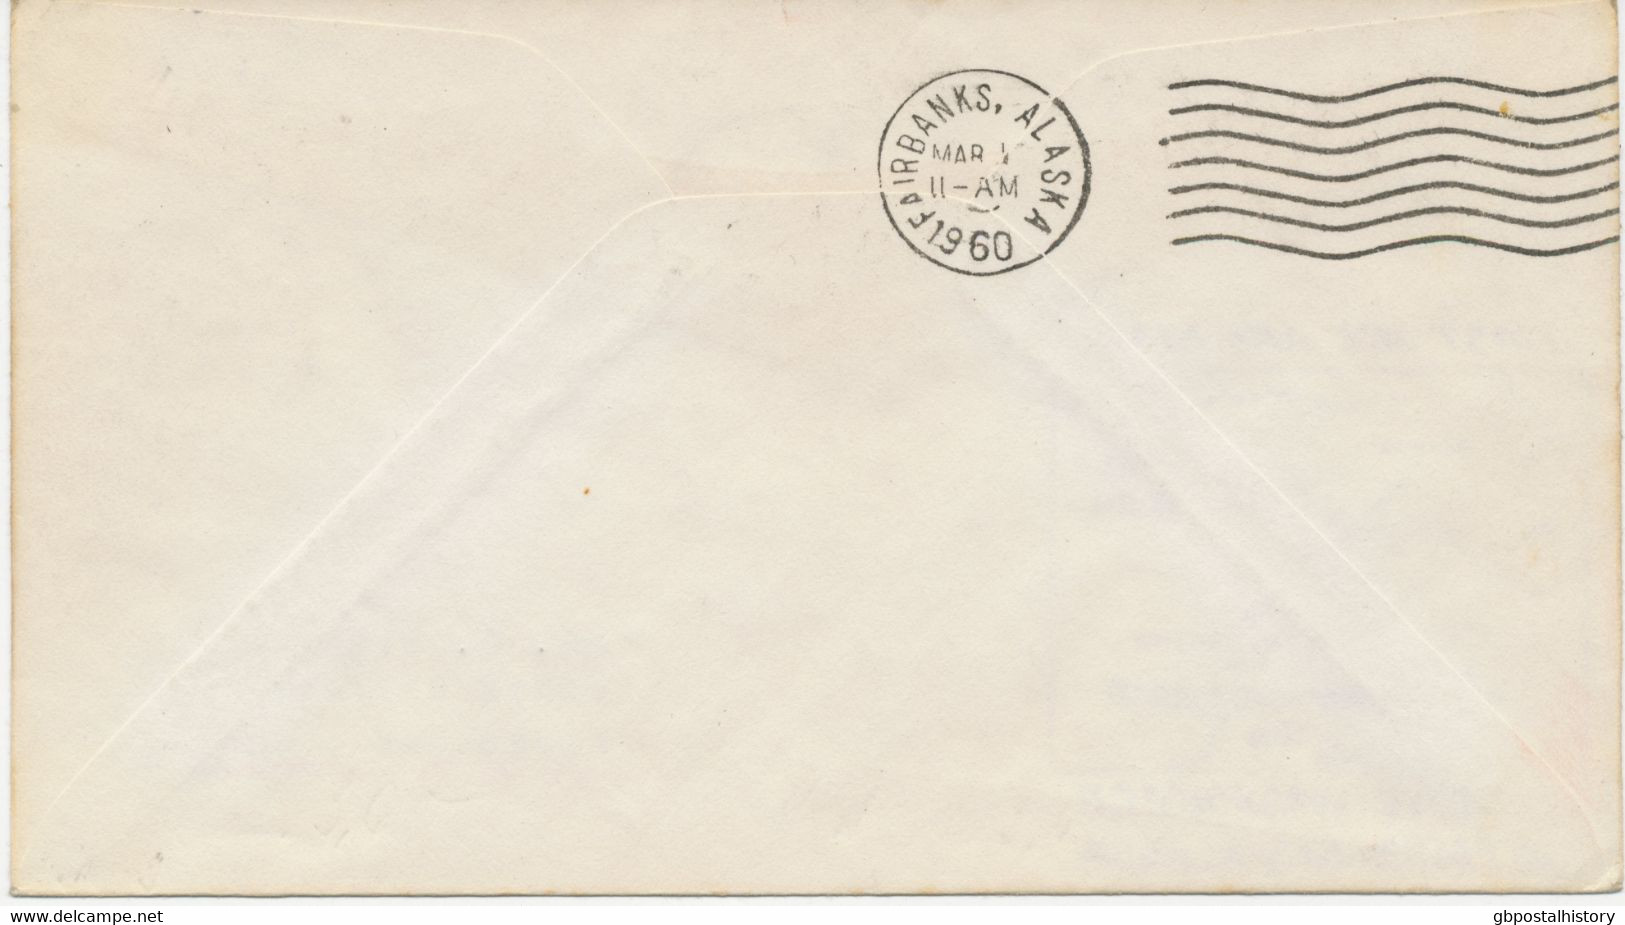 USA 1960 Selt. Kab.-Erstflug A.M. 20 - First Jet Air Mail Service - "Seattle, Washington - Fairbanks, Alaska" - 2c. 1941-1960 Lettres